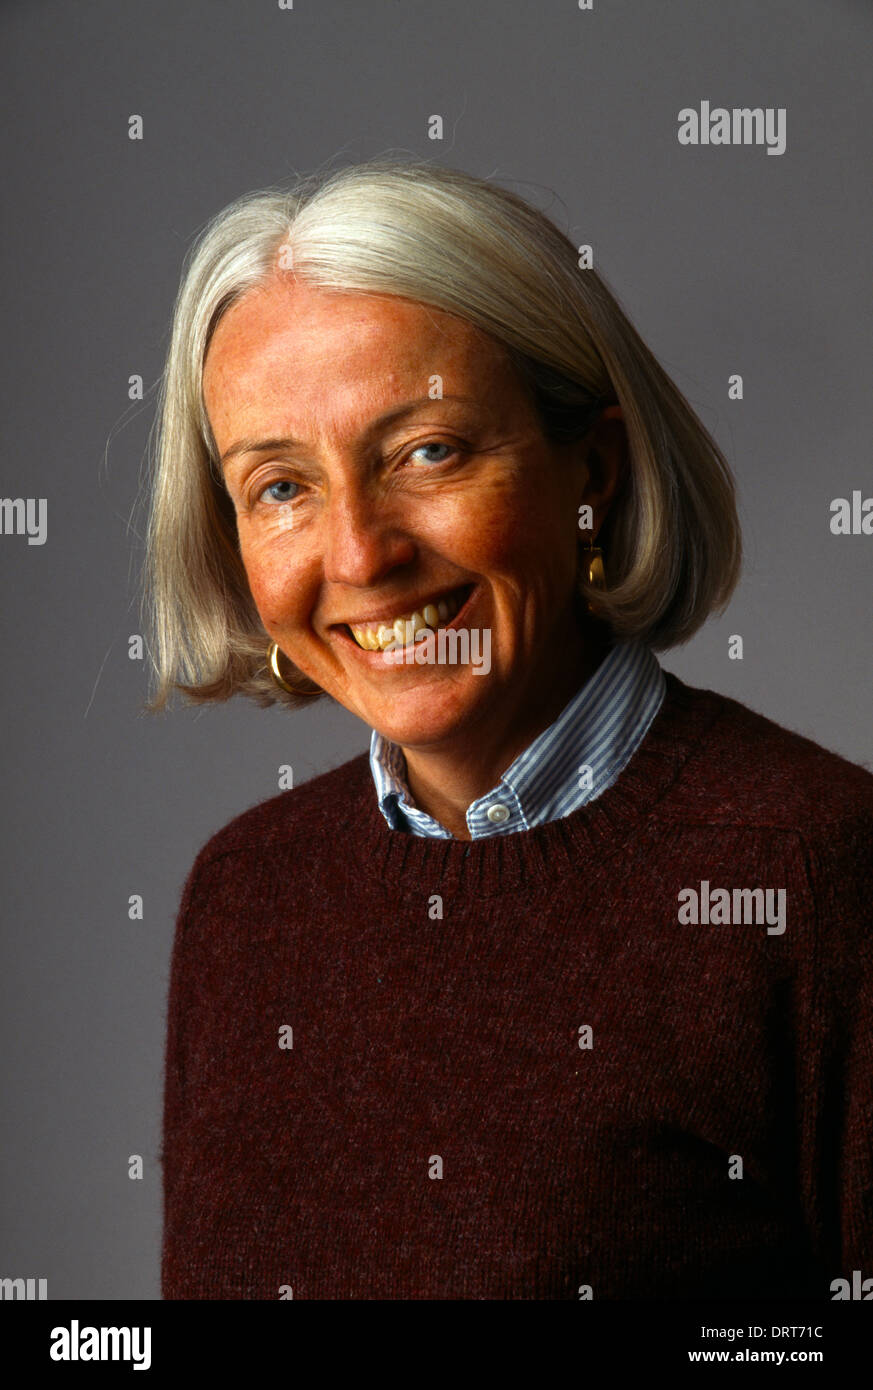 https://c8.alamy.com/comp/DRT71C/california-usa-portrait-of-a-60-year-old-woman-with-grey-hair-DRT71C.jpg